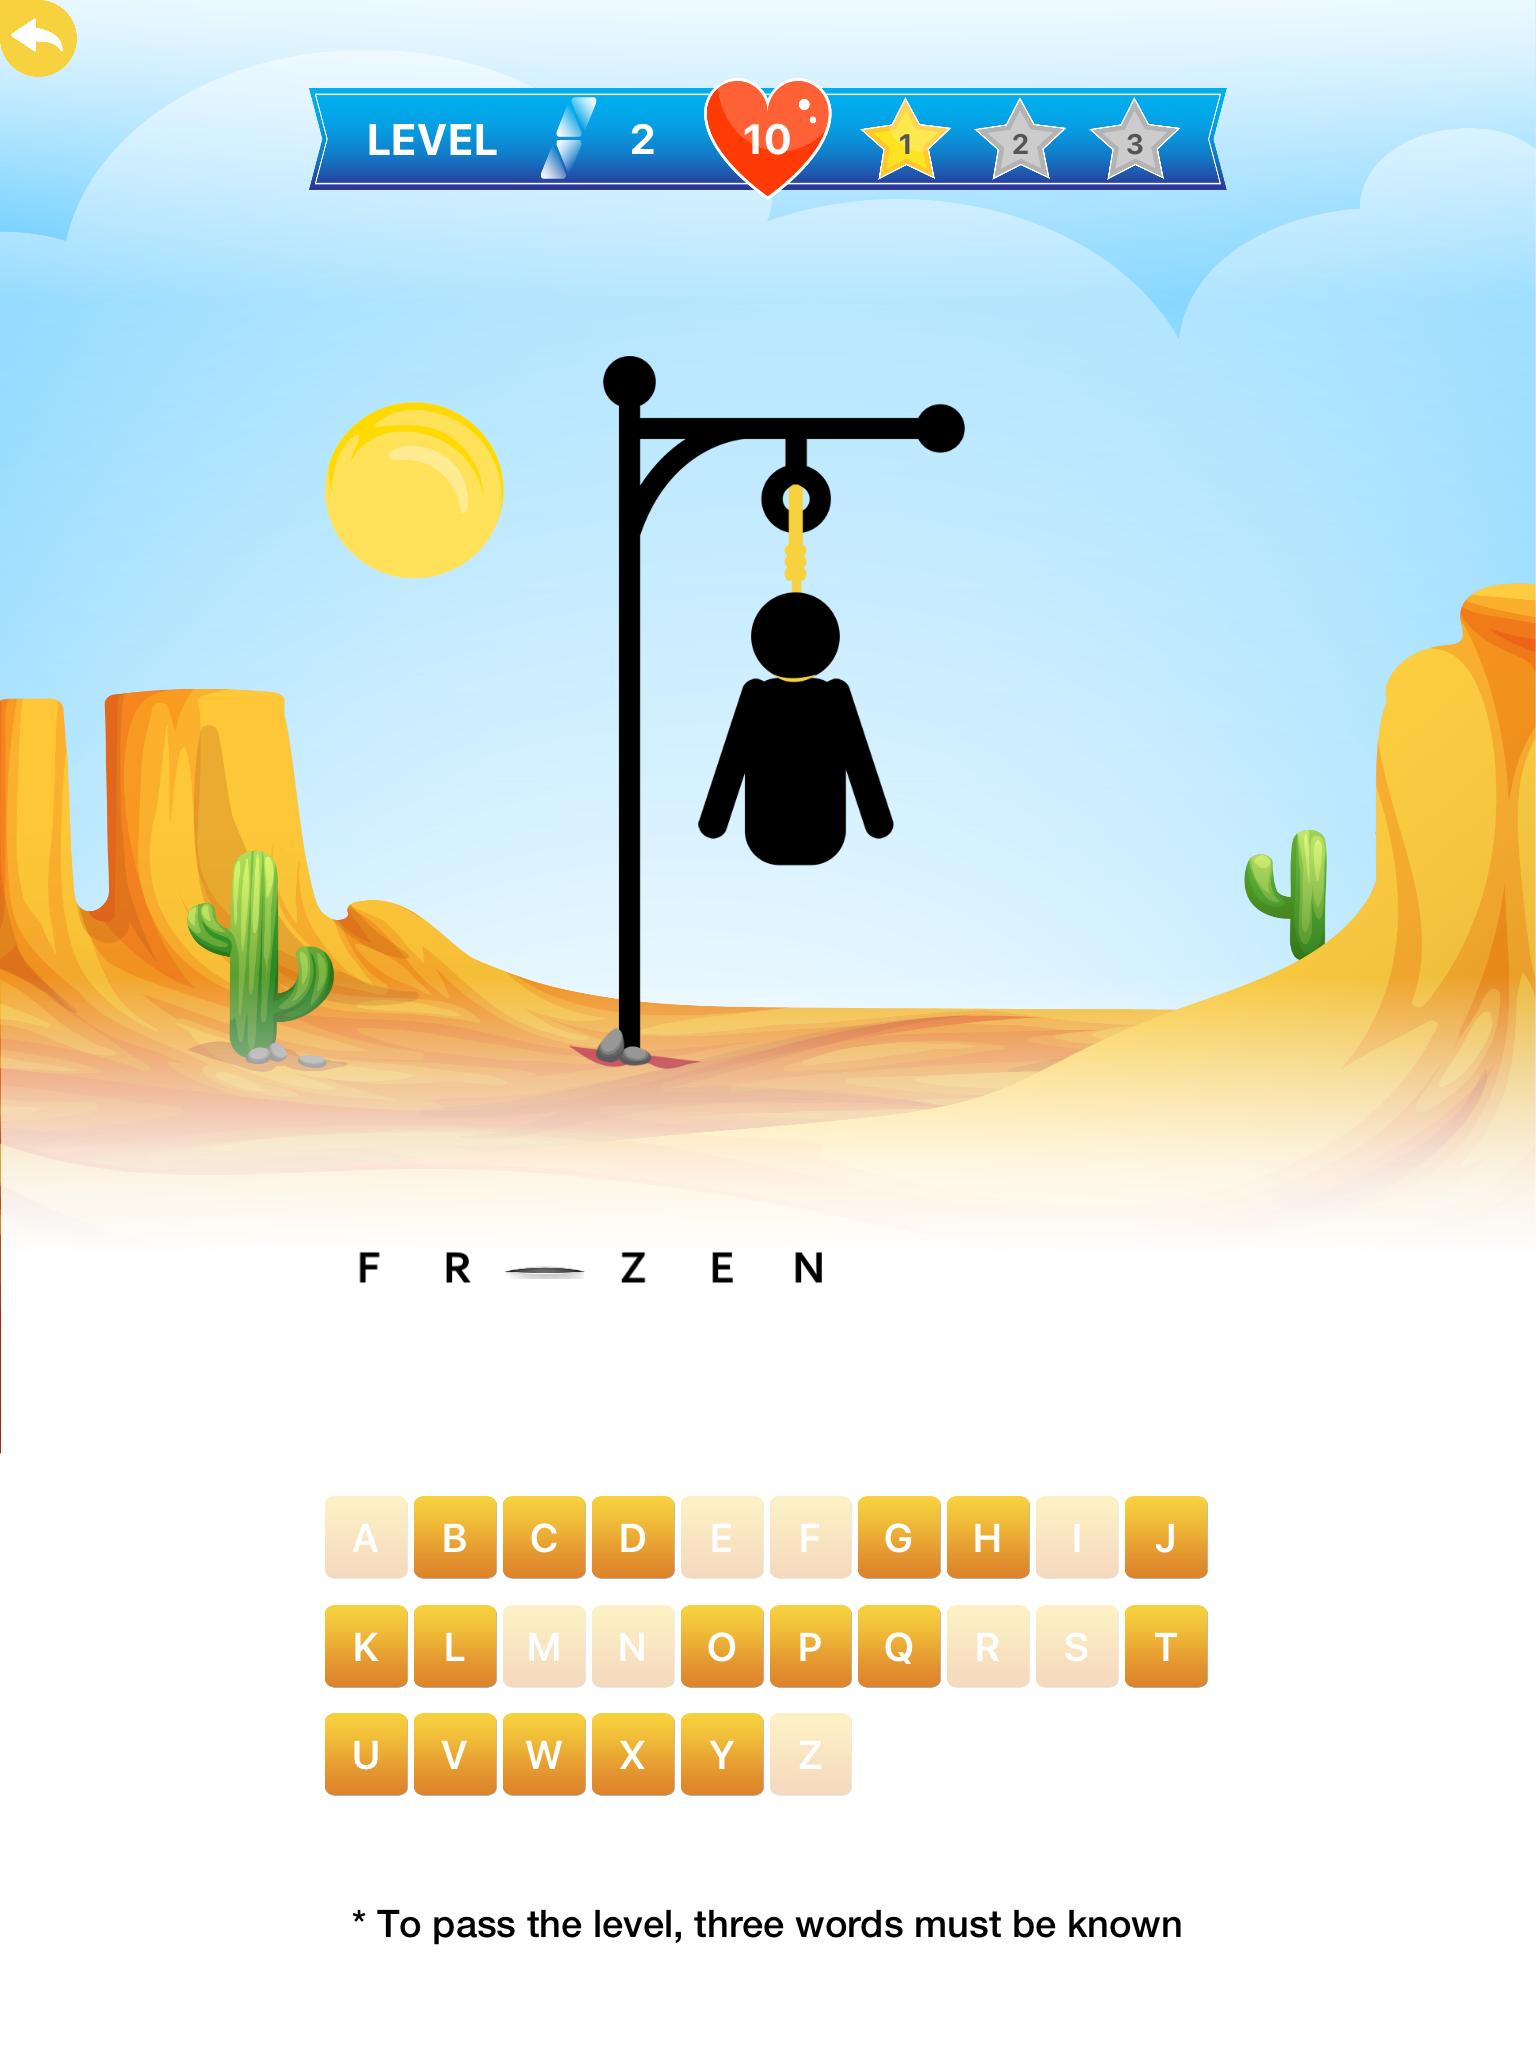 Hangman Multiplayer - Online Word Game 7.9.0 Screenshot 22